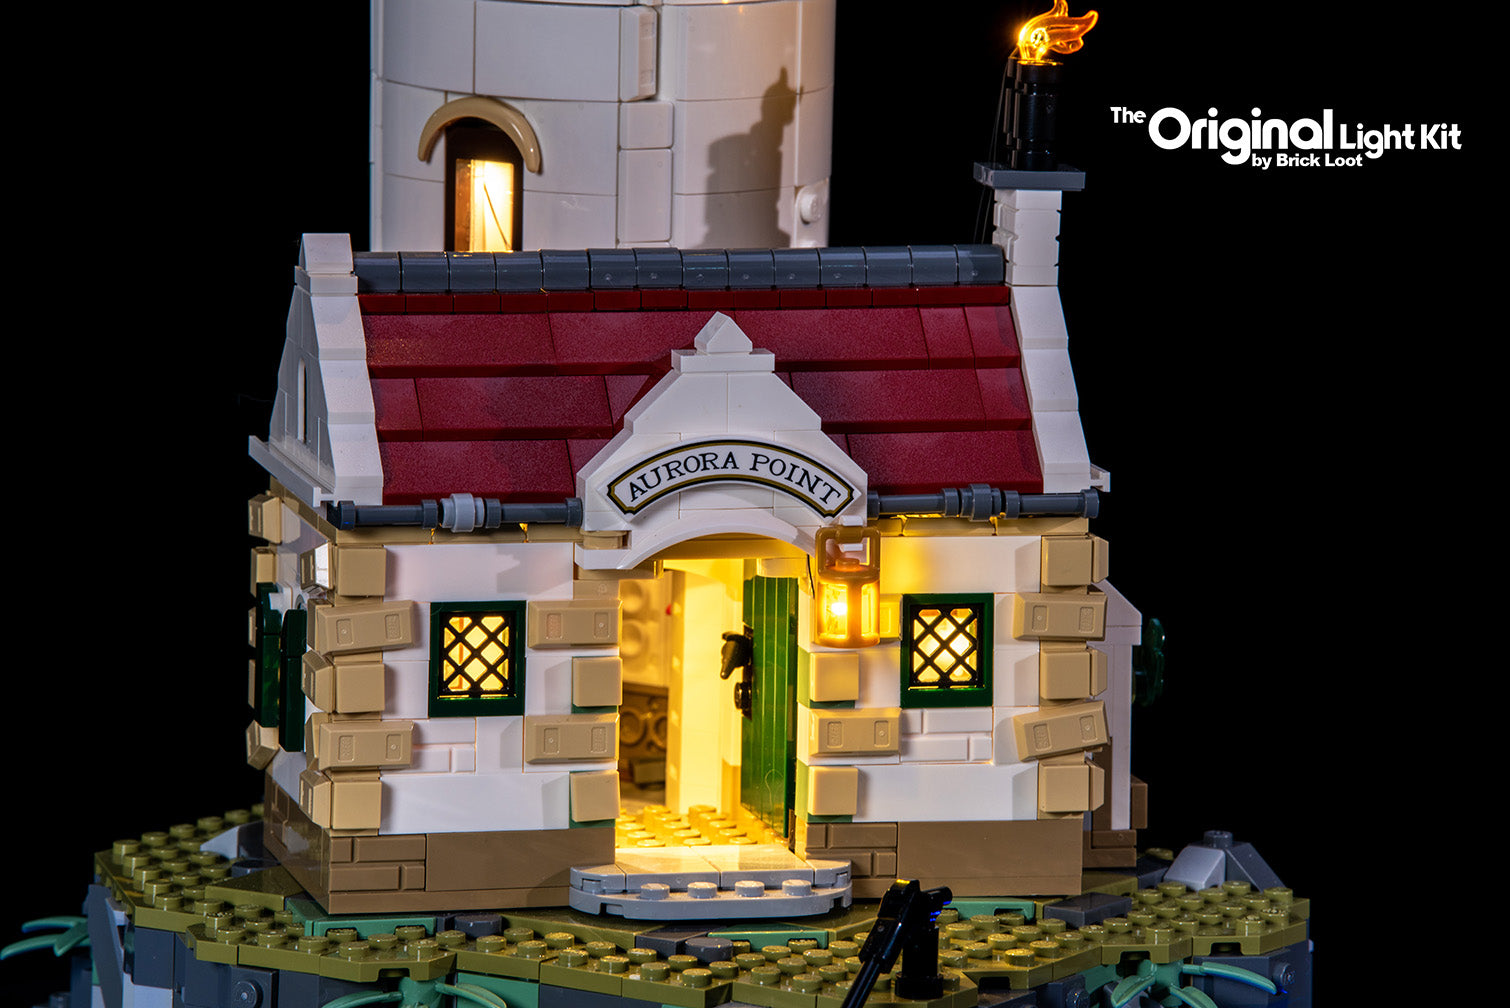 Brick Loot Custom LED Lighting Kits for LEGO